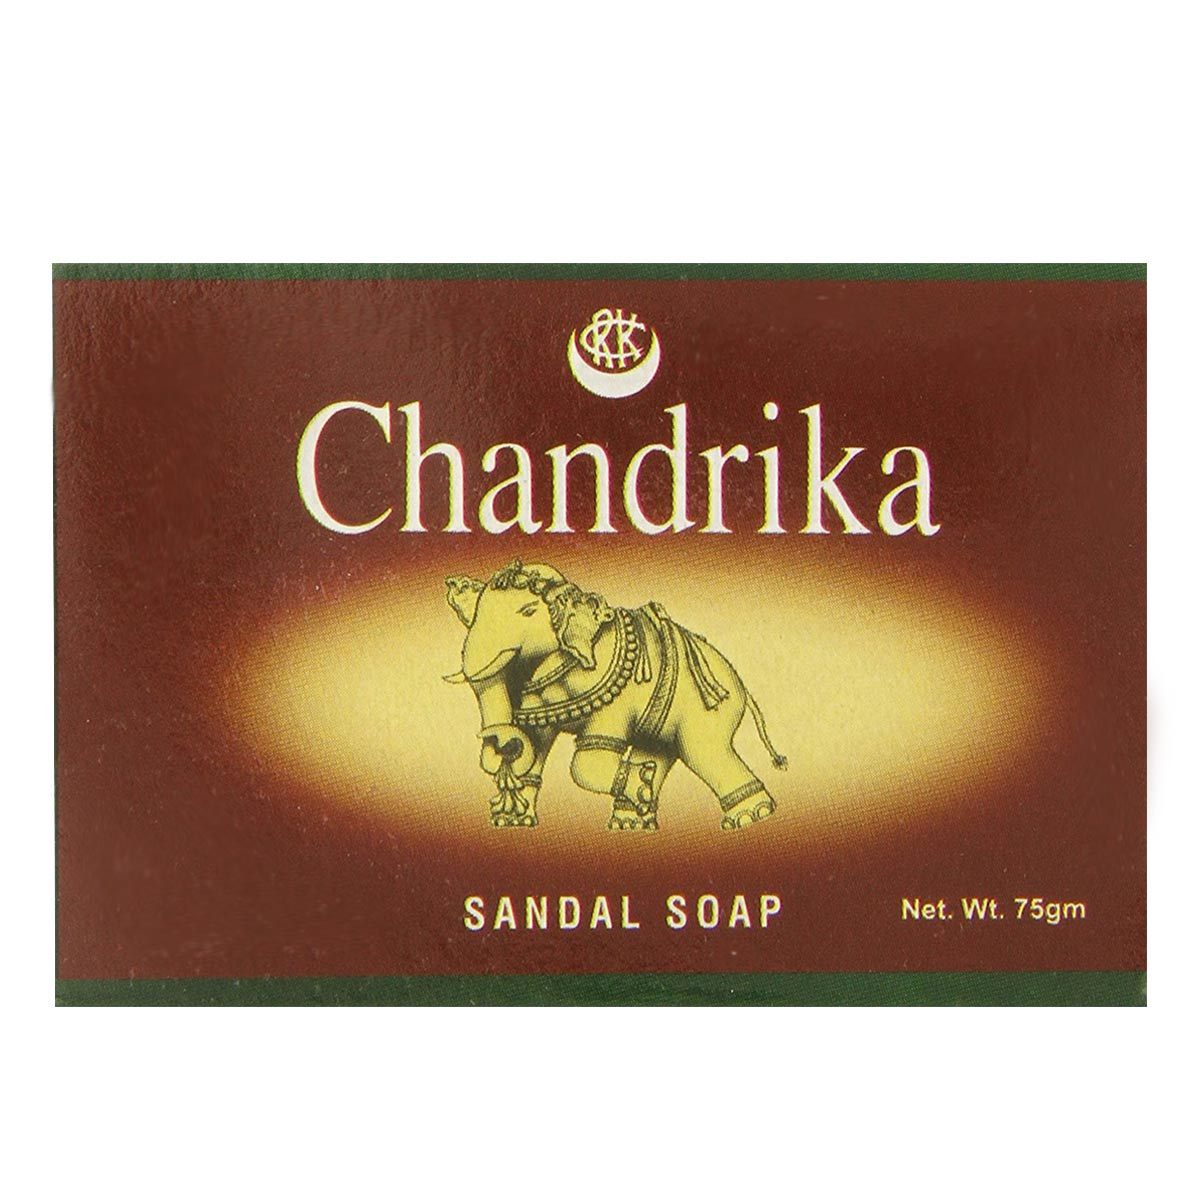 Primary image of Sandalwood Soap